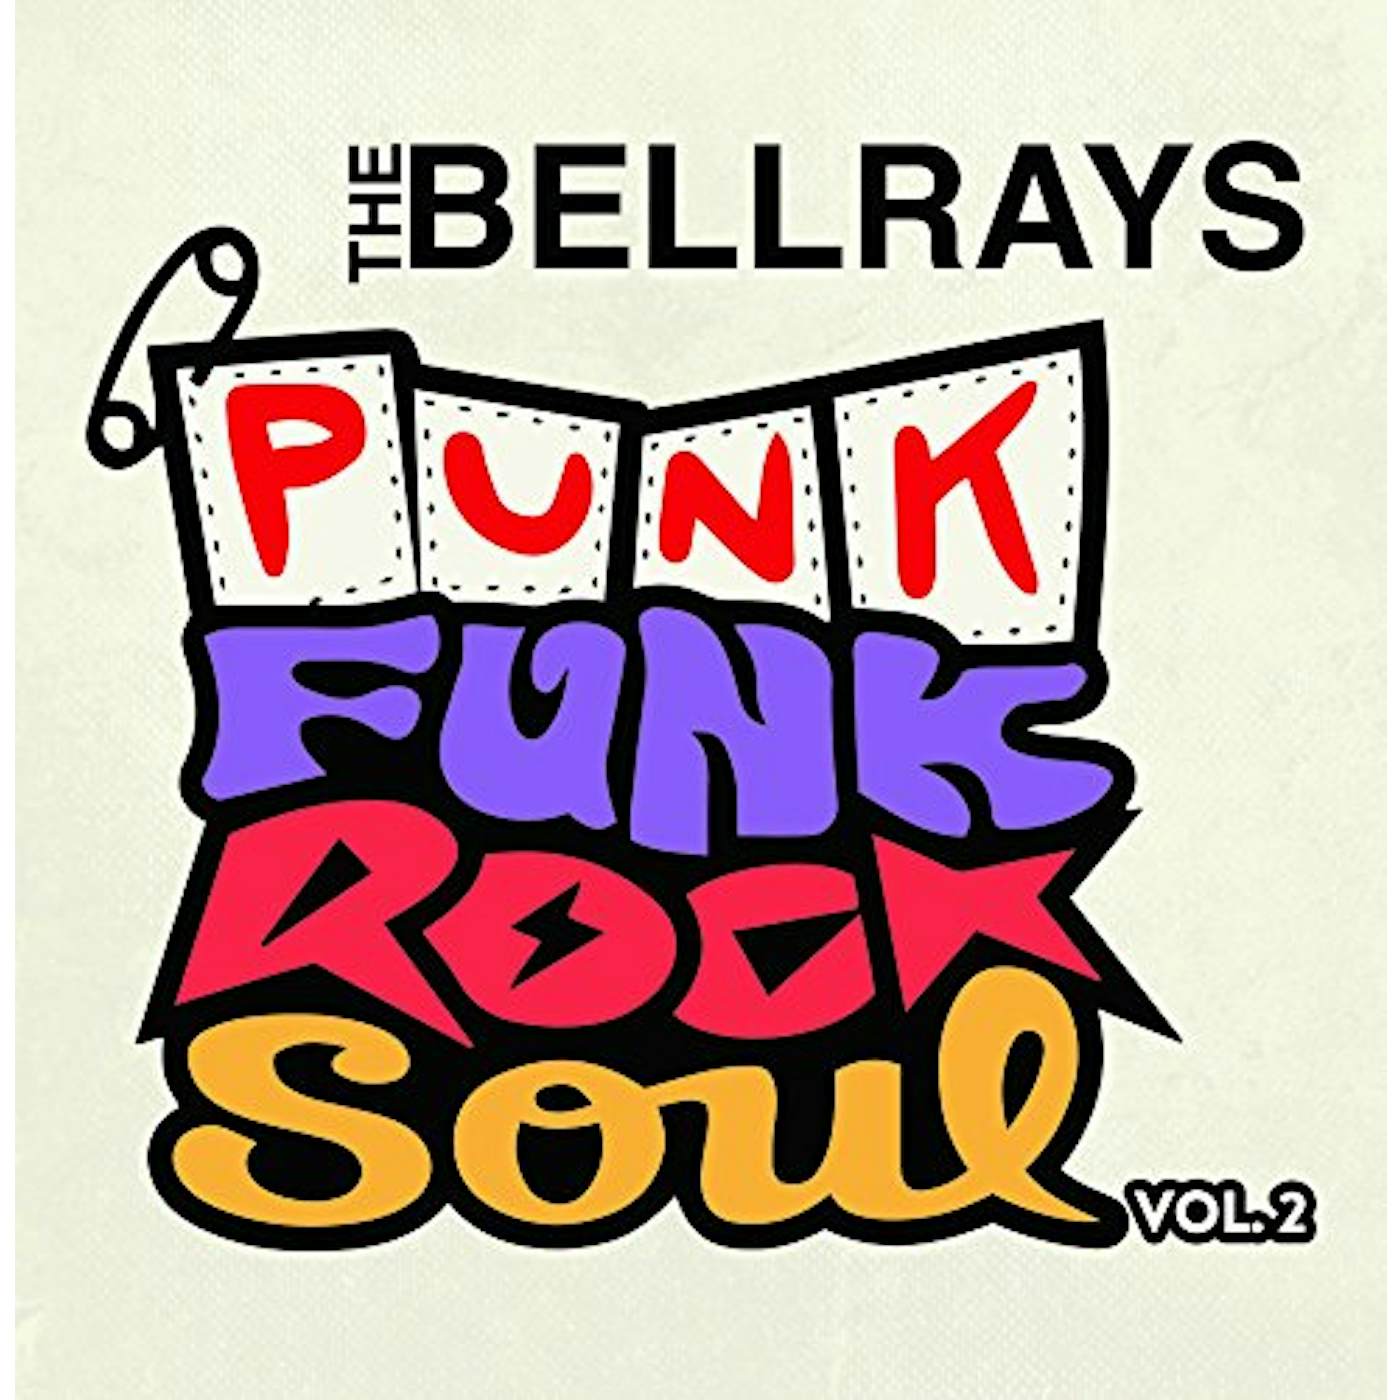 The BellRays PUNK FUNK ROCK SOUL 2 Vinyl Record